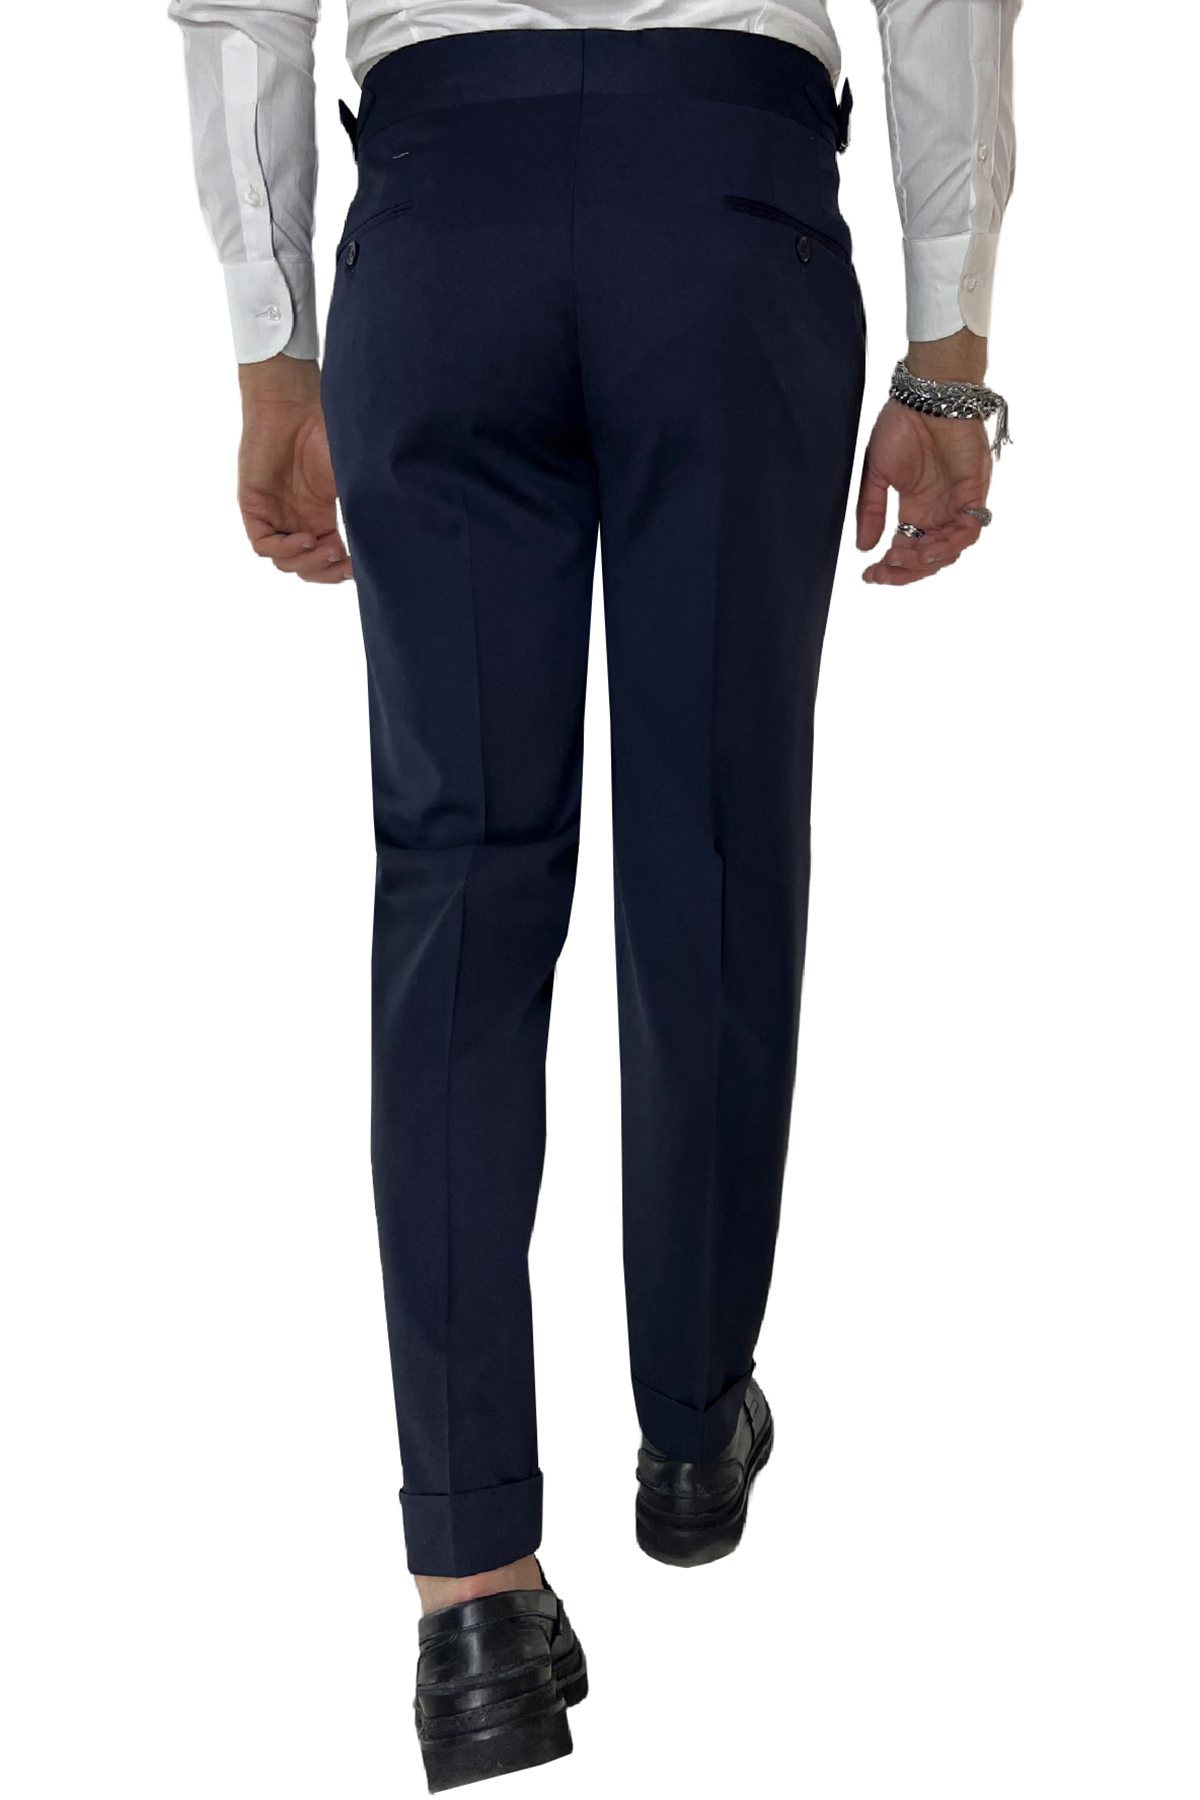 Pantalone uomo Blu Navy vita alta tasca america in fresco lana 100% Vitale Barberis Canonico fibbie laterali e risvolto 4cm